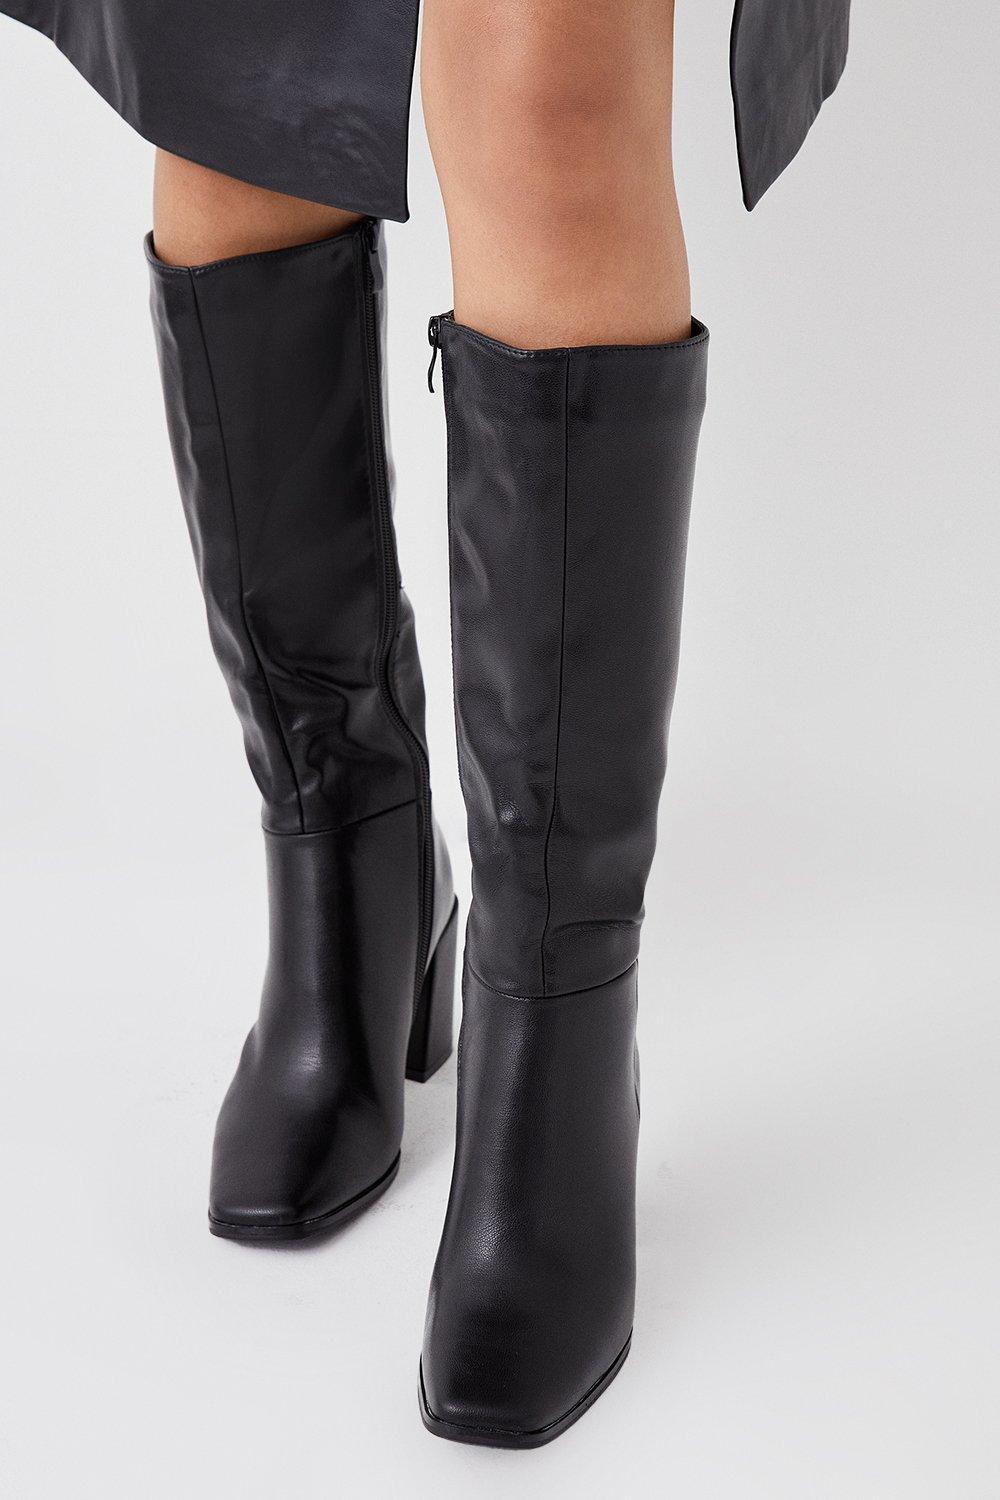 Women’s Kristen Square Toe Clean Knee High Boots - black - 6